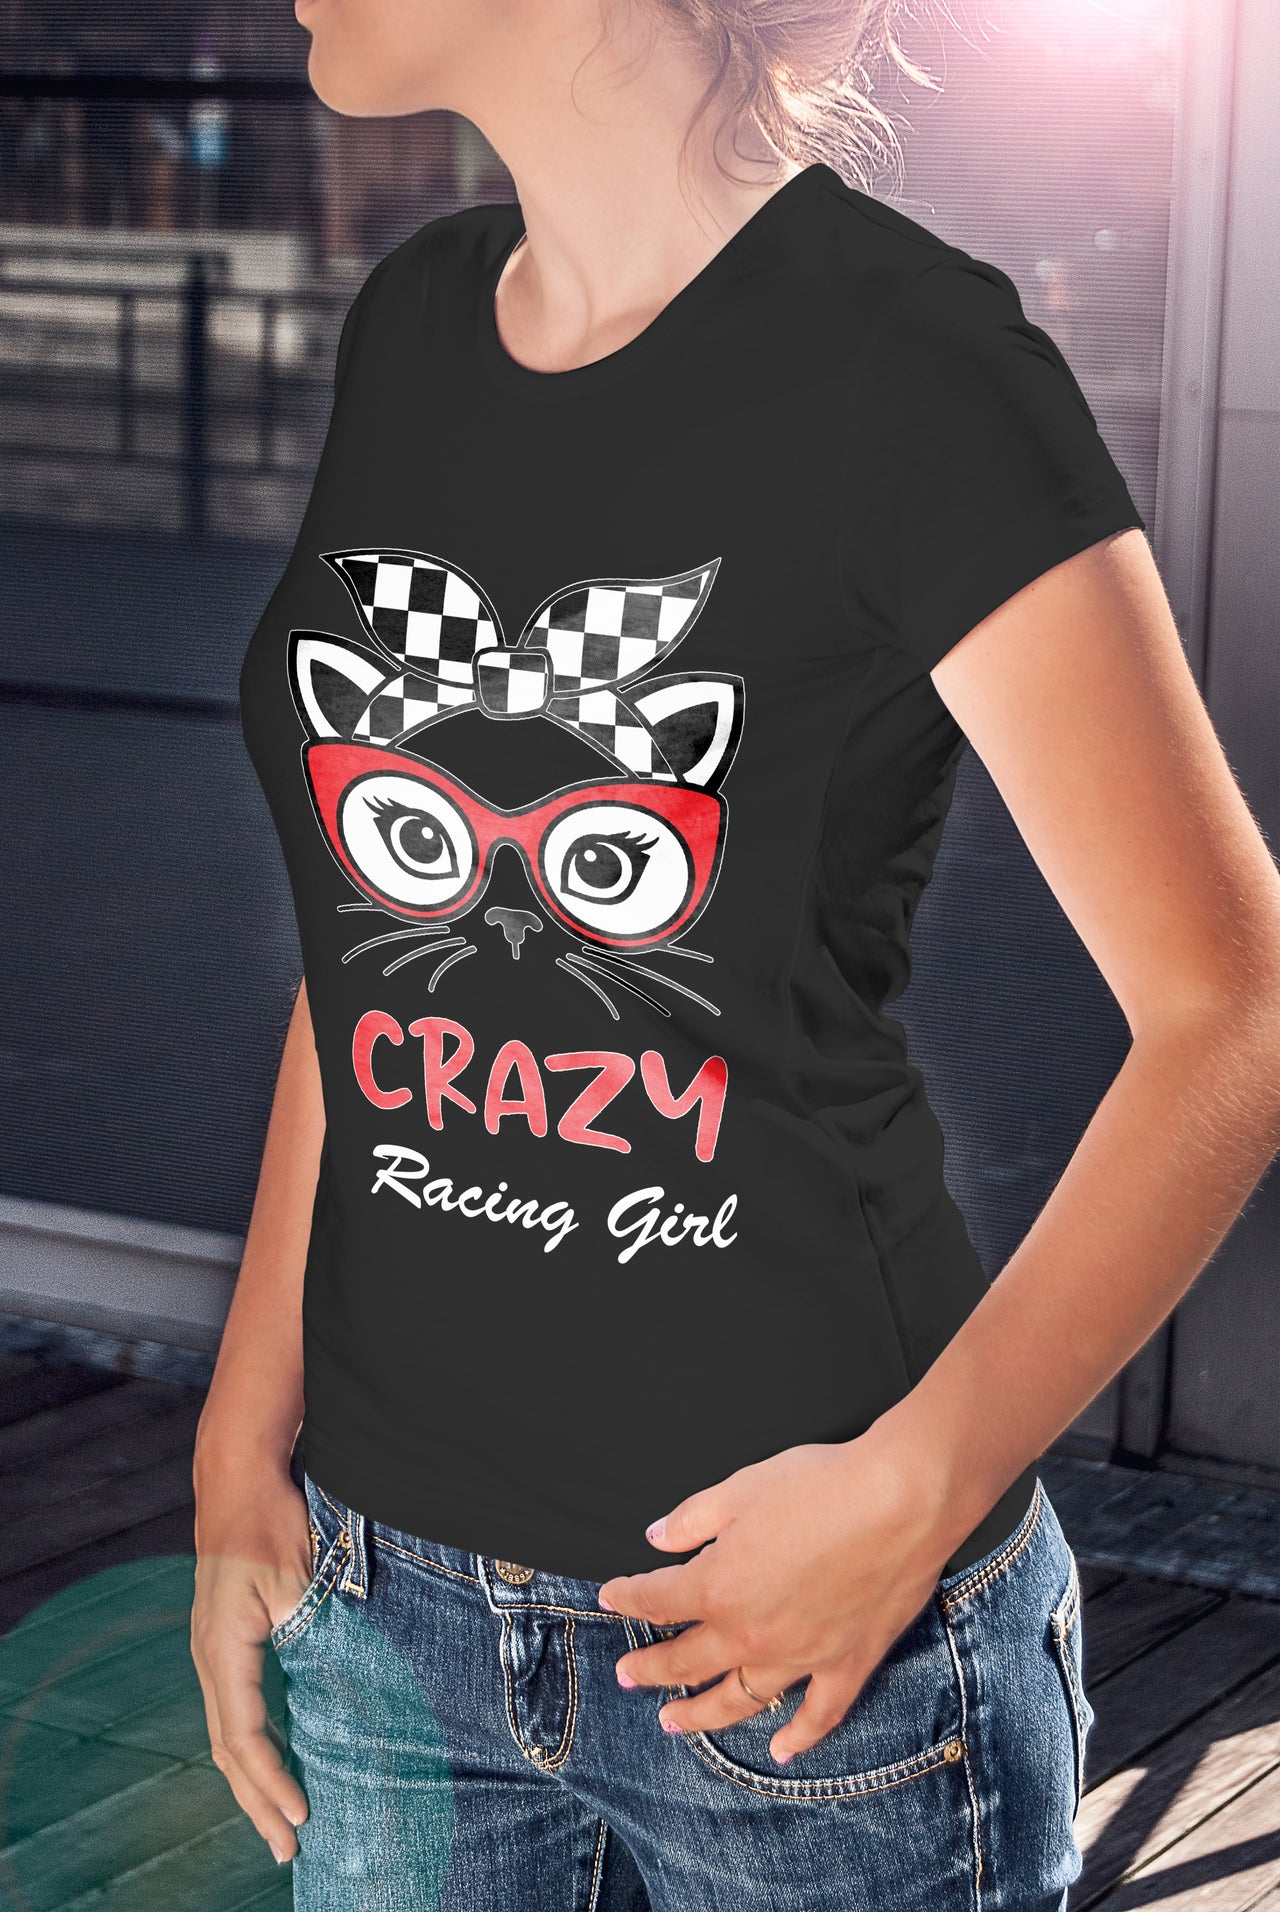 Racing Girl T-Shirts